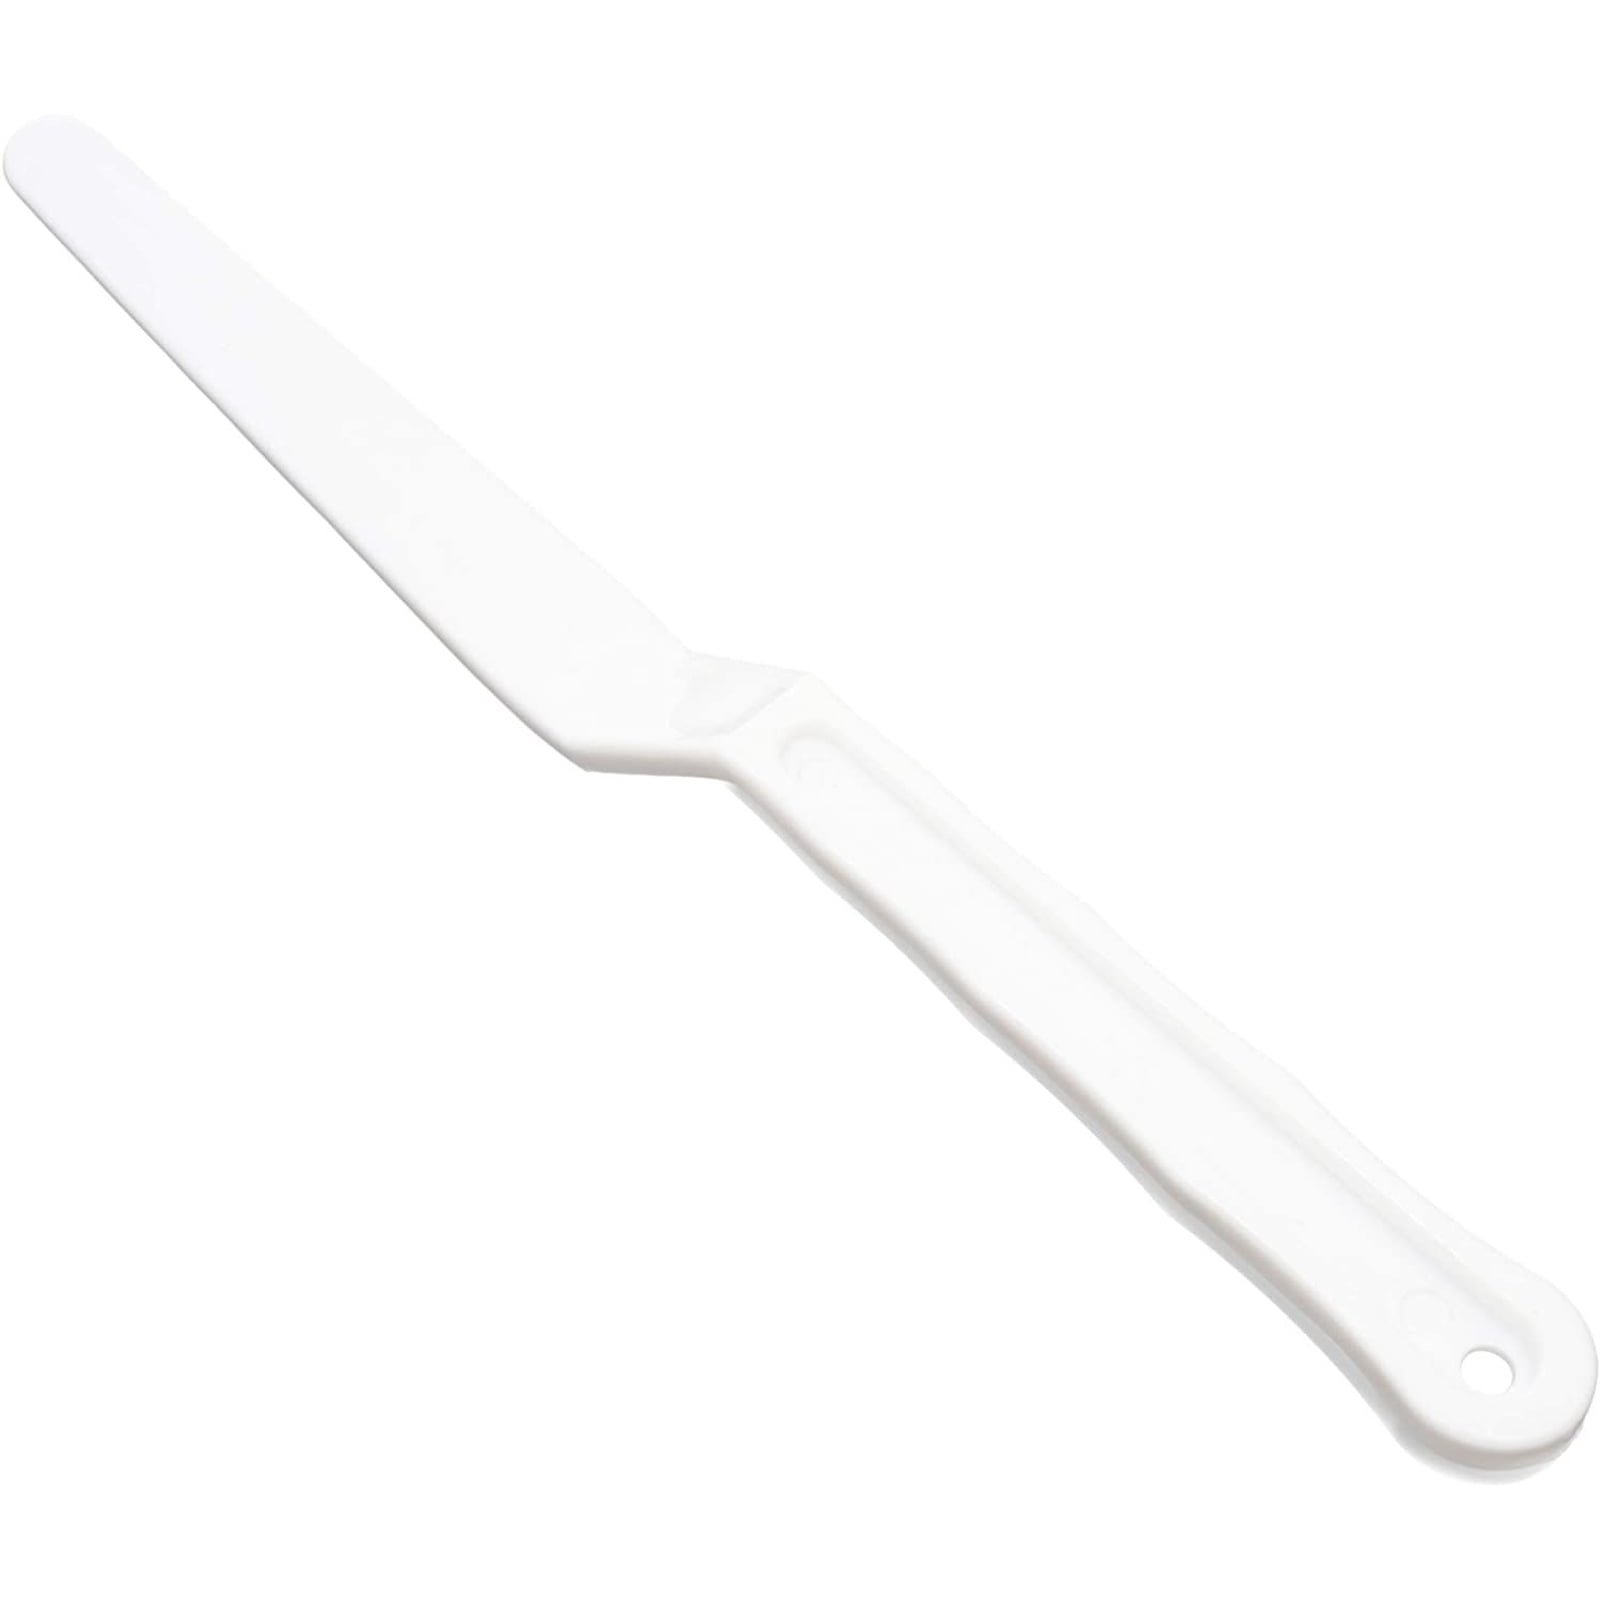 Plastic Palette Knife Set – loxleyarts.co